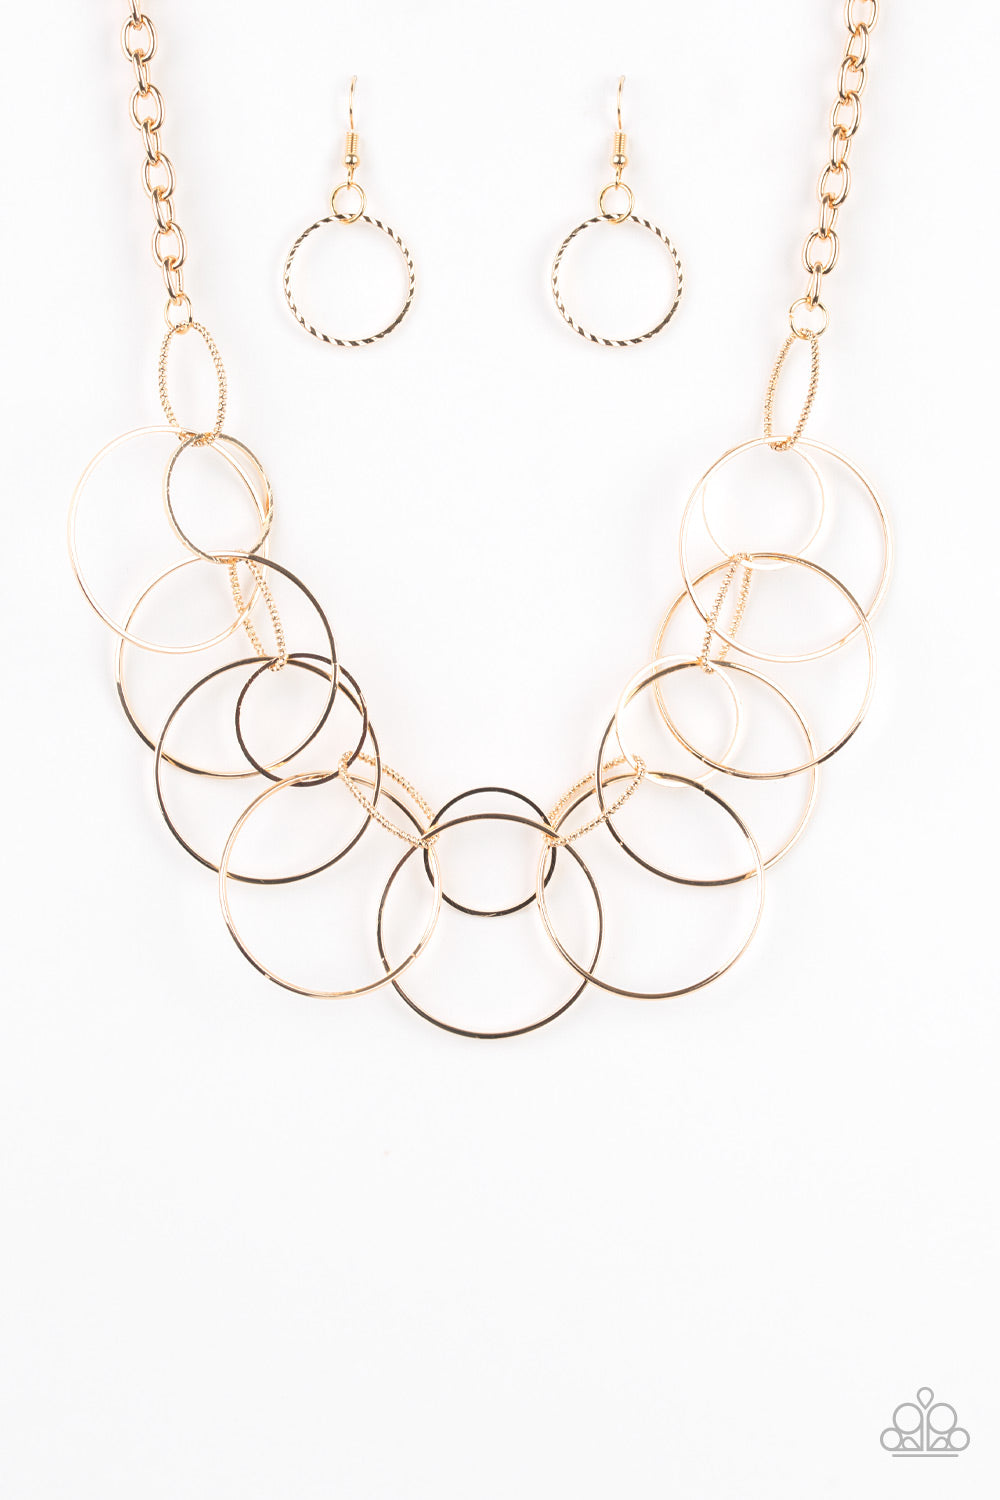 Paparazzi Accessories Circa de Couture - Gold Necklaces - Lady T Accessories